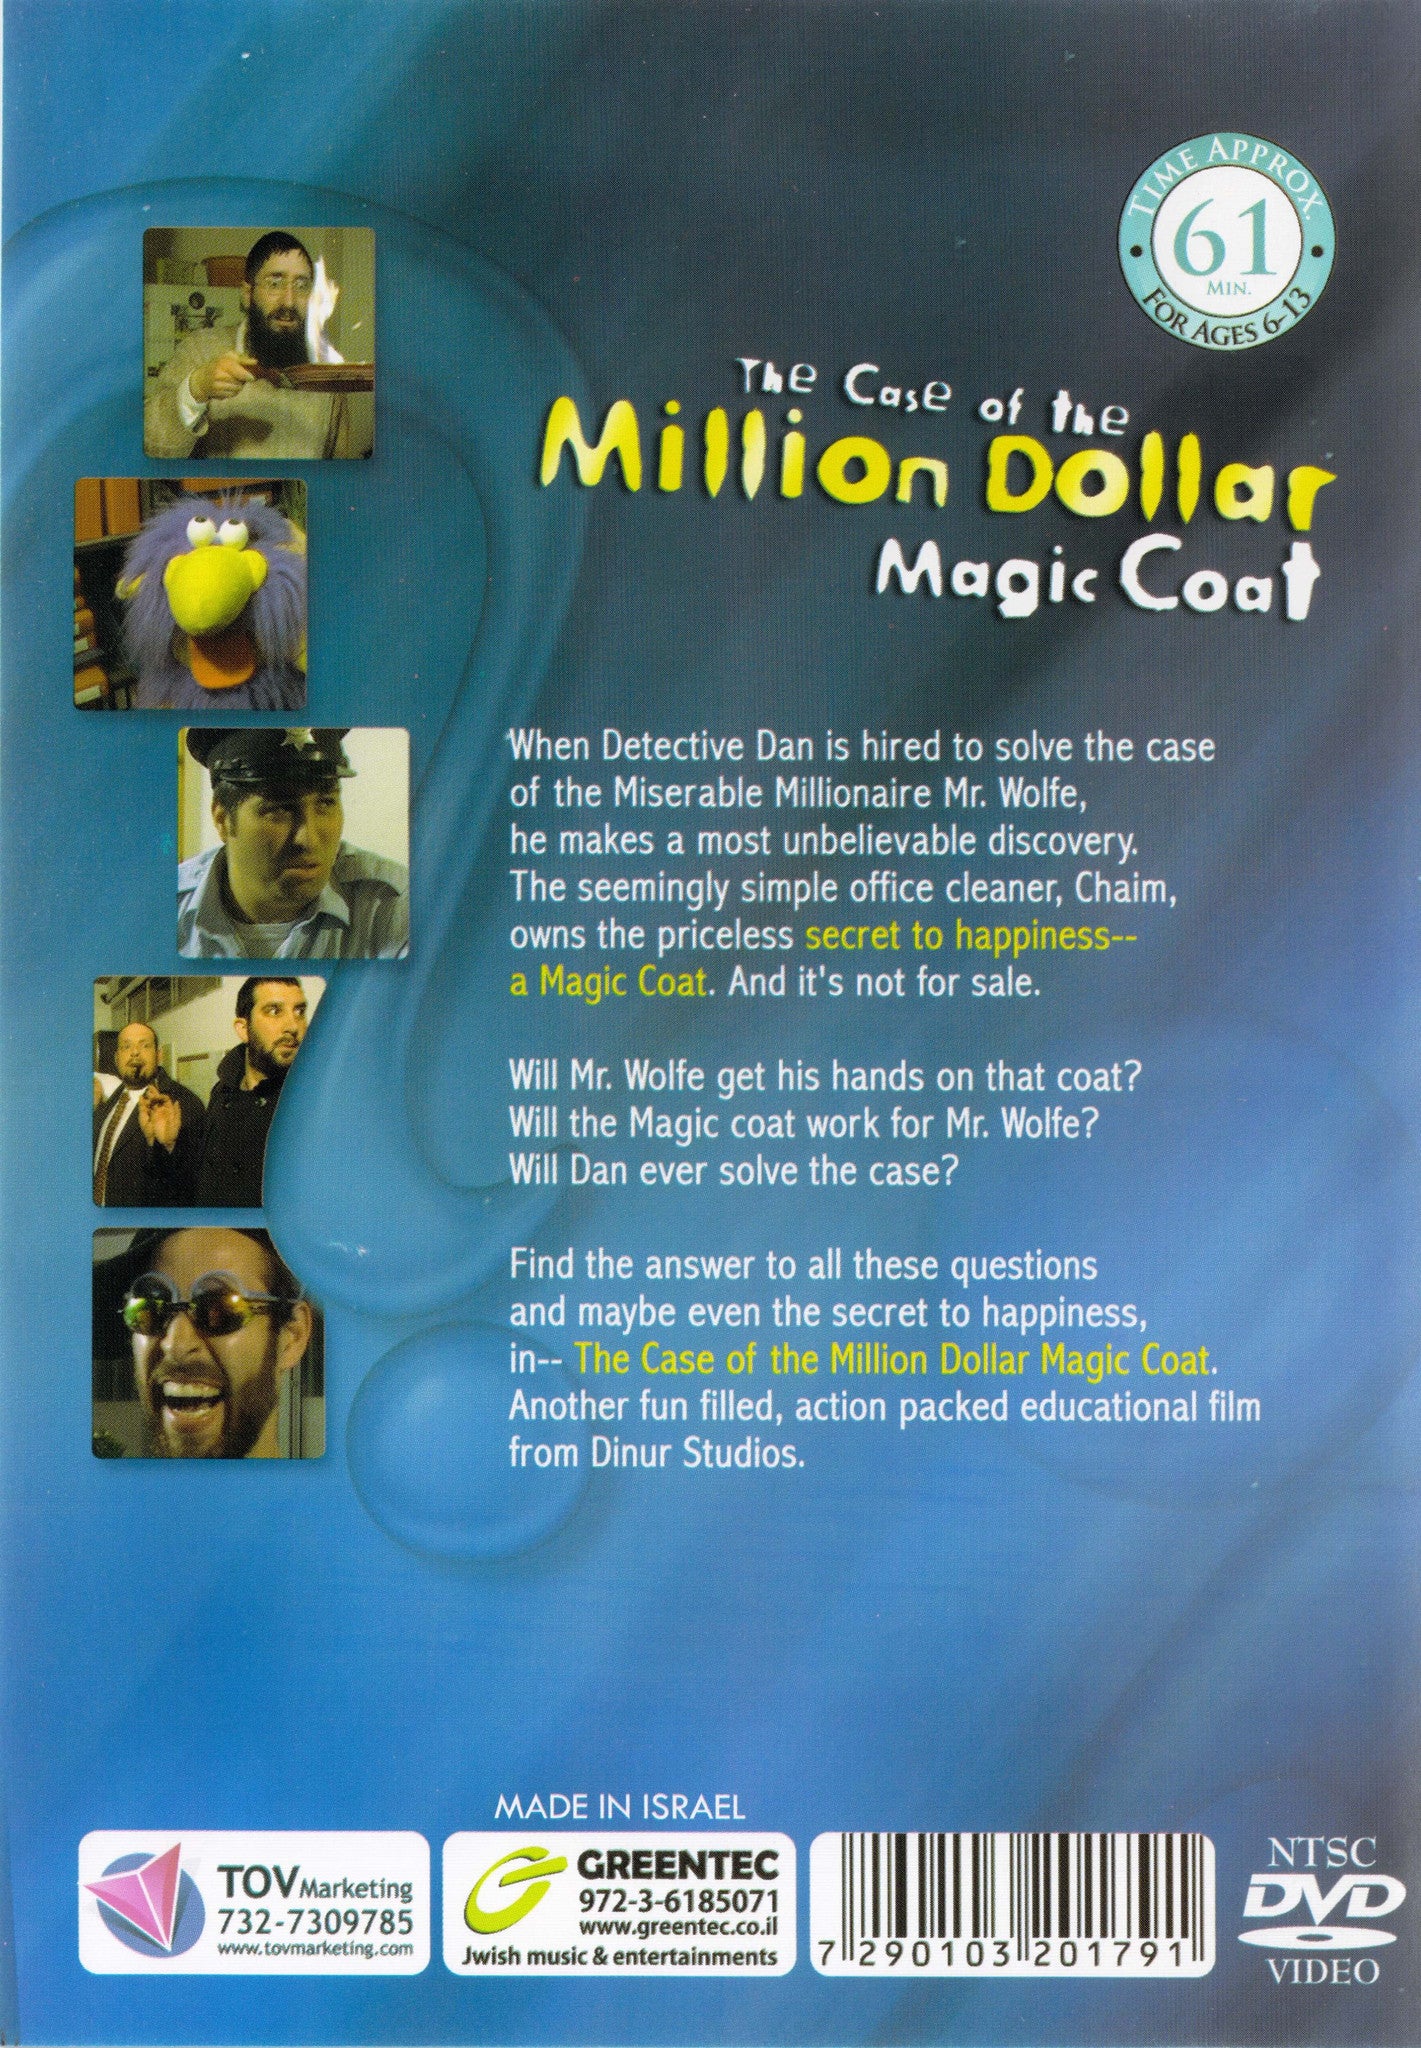 Greentec Movies - The Million Dollar Magic Coat